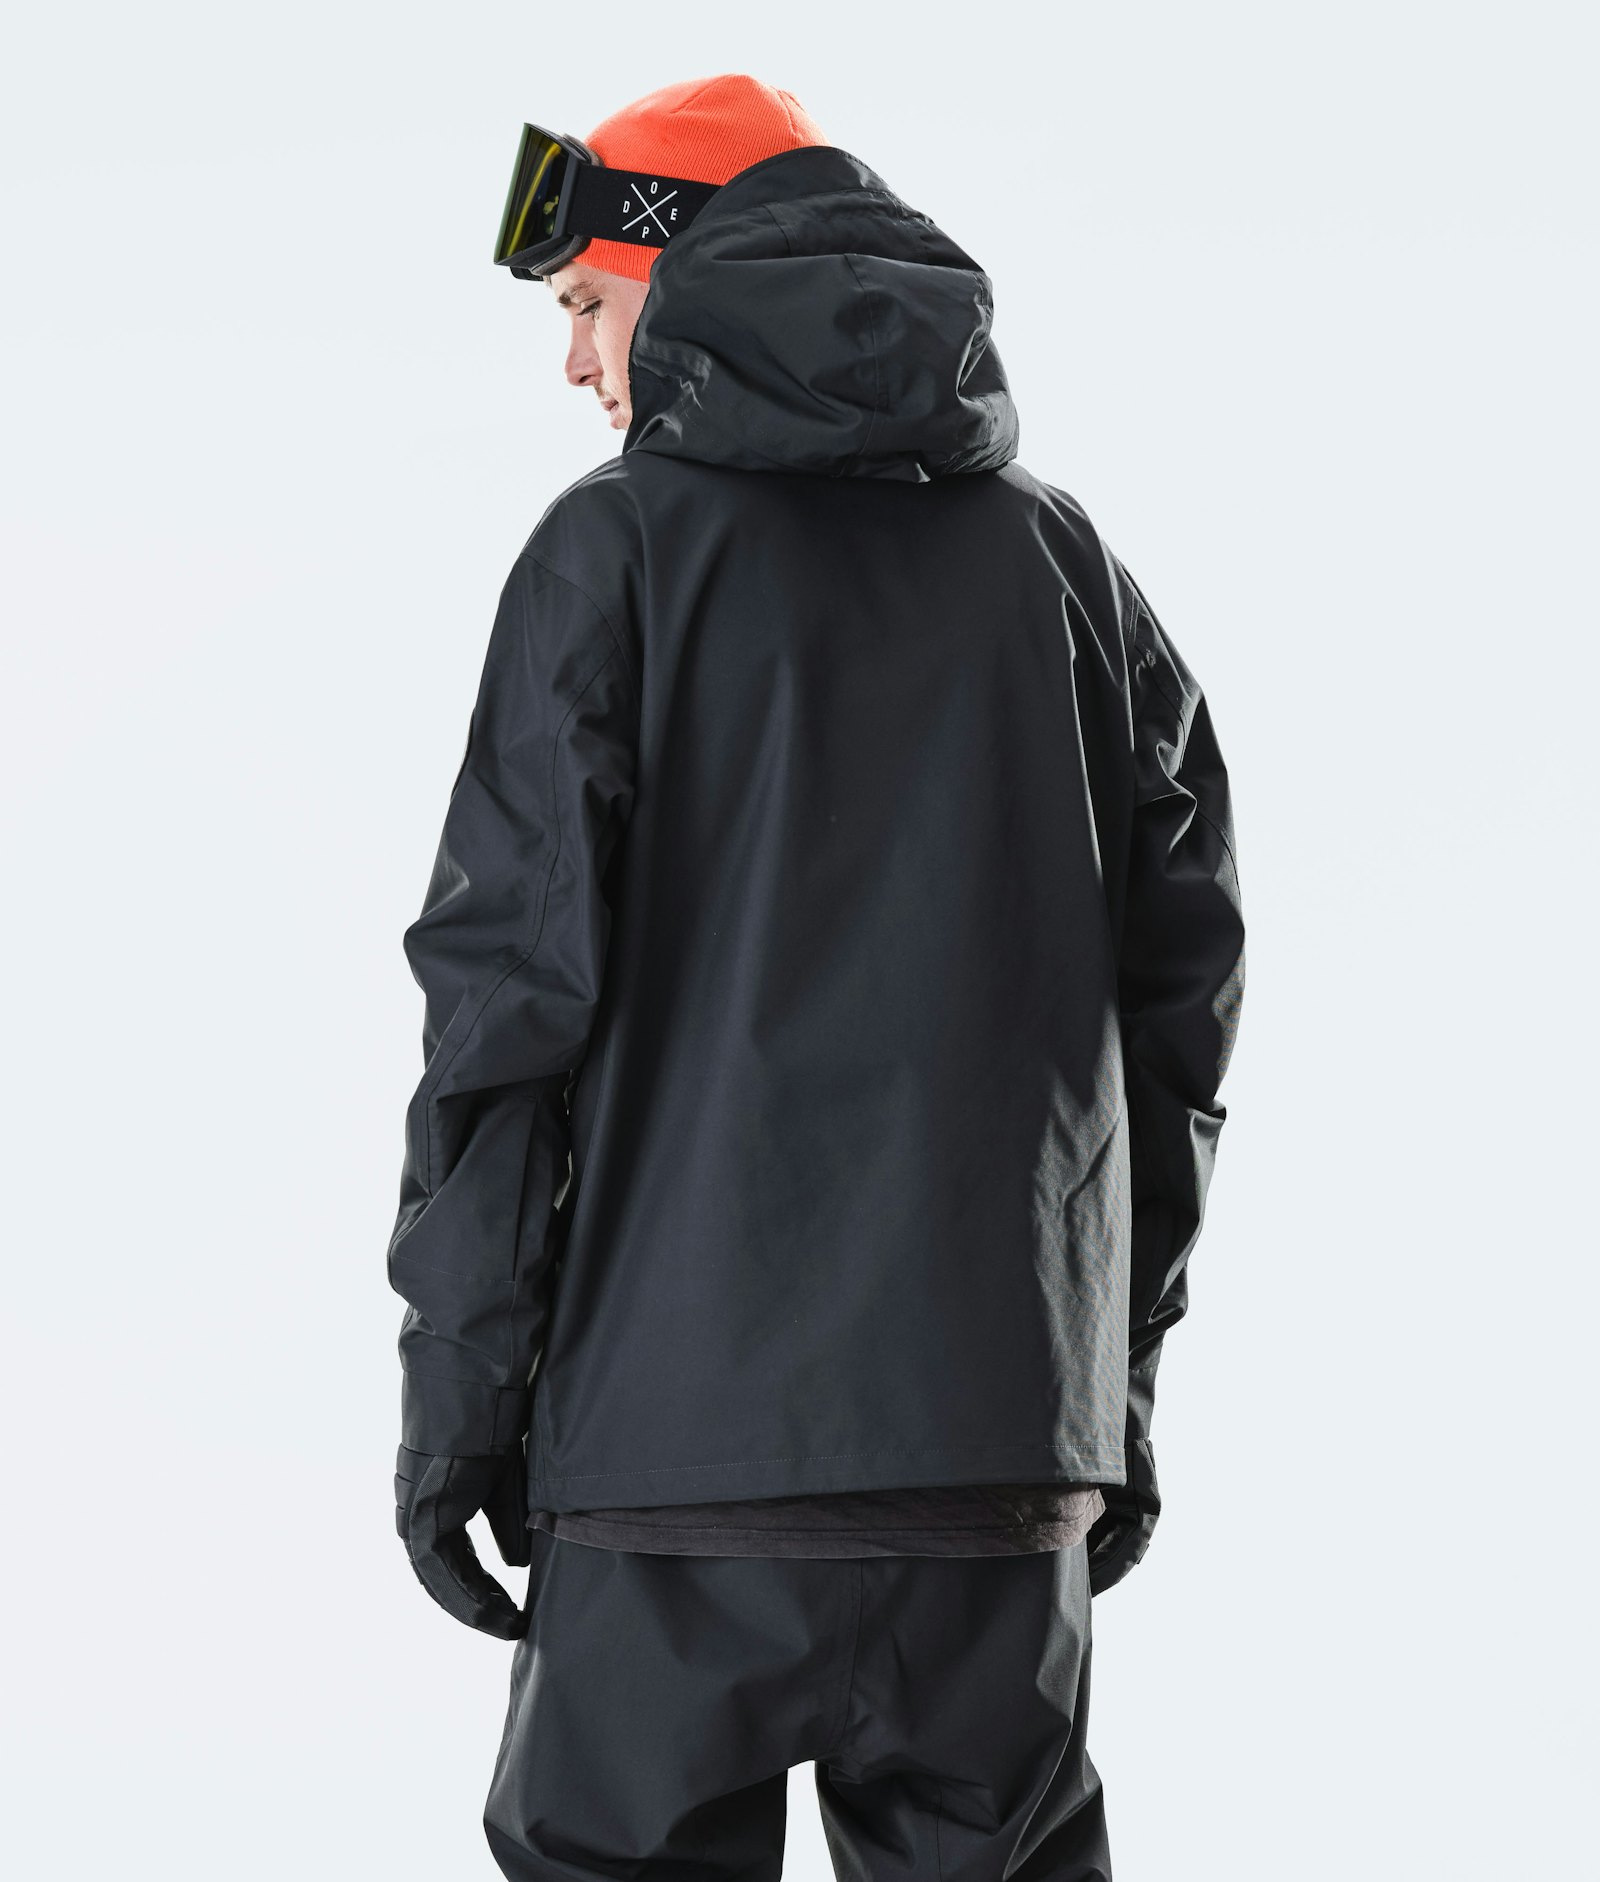 Blizzard 2020 Snowboard Jacket Men Black